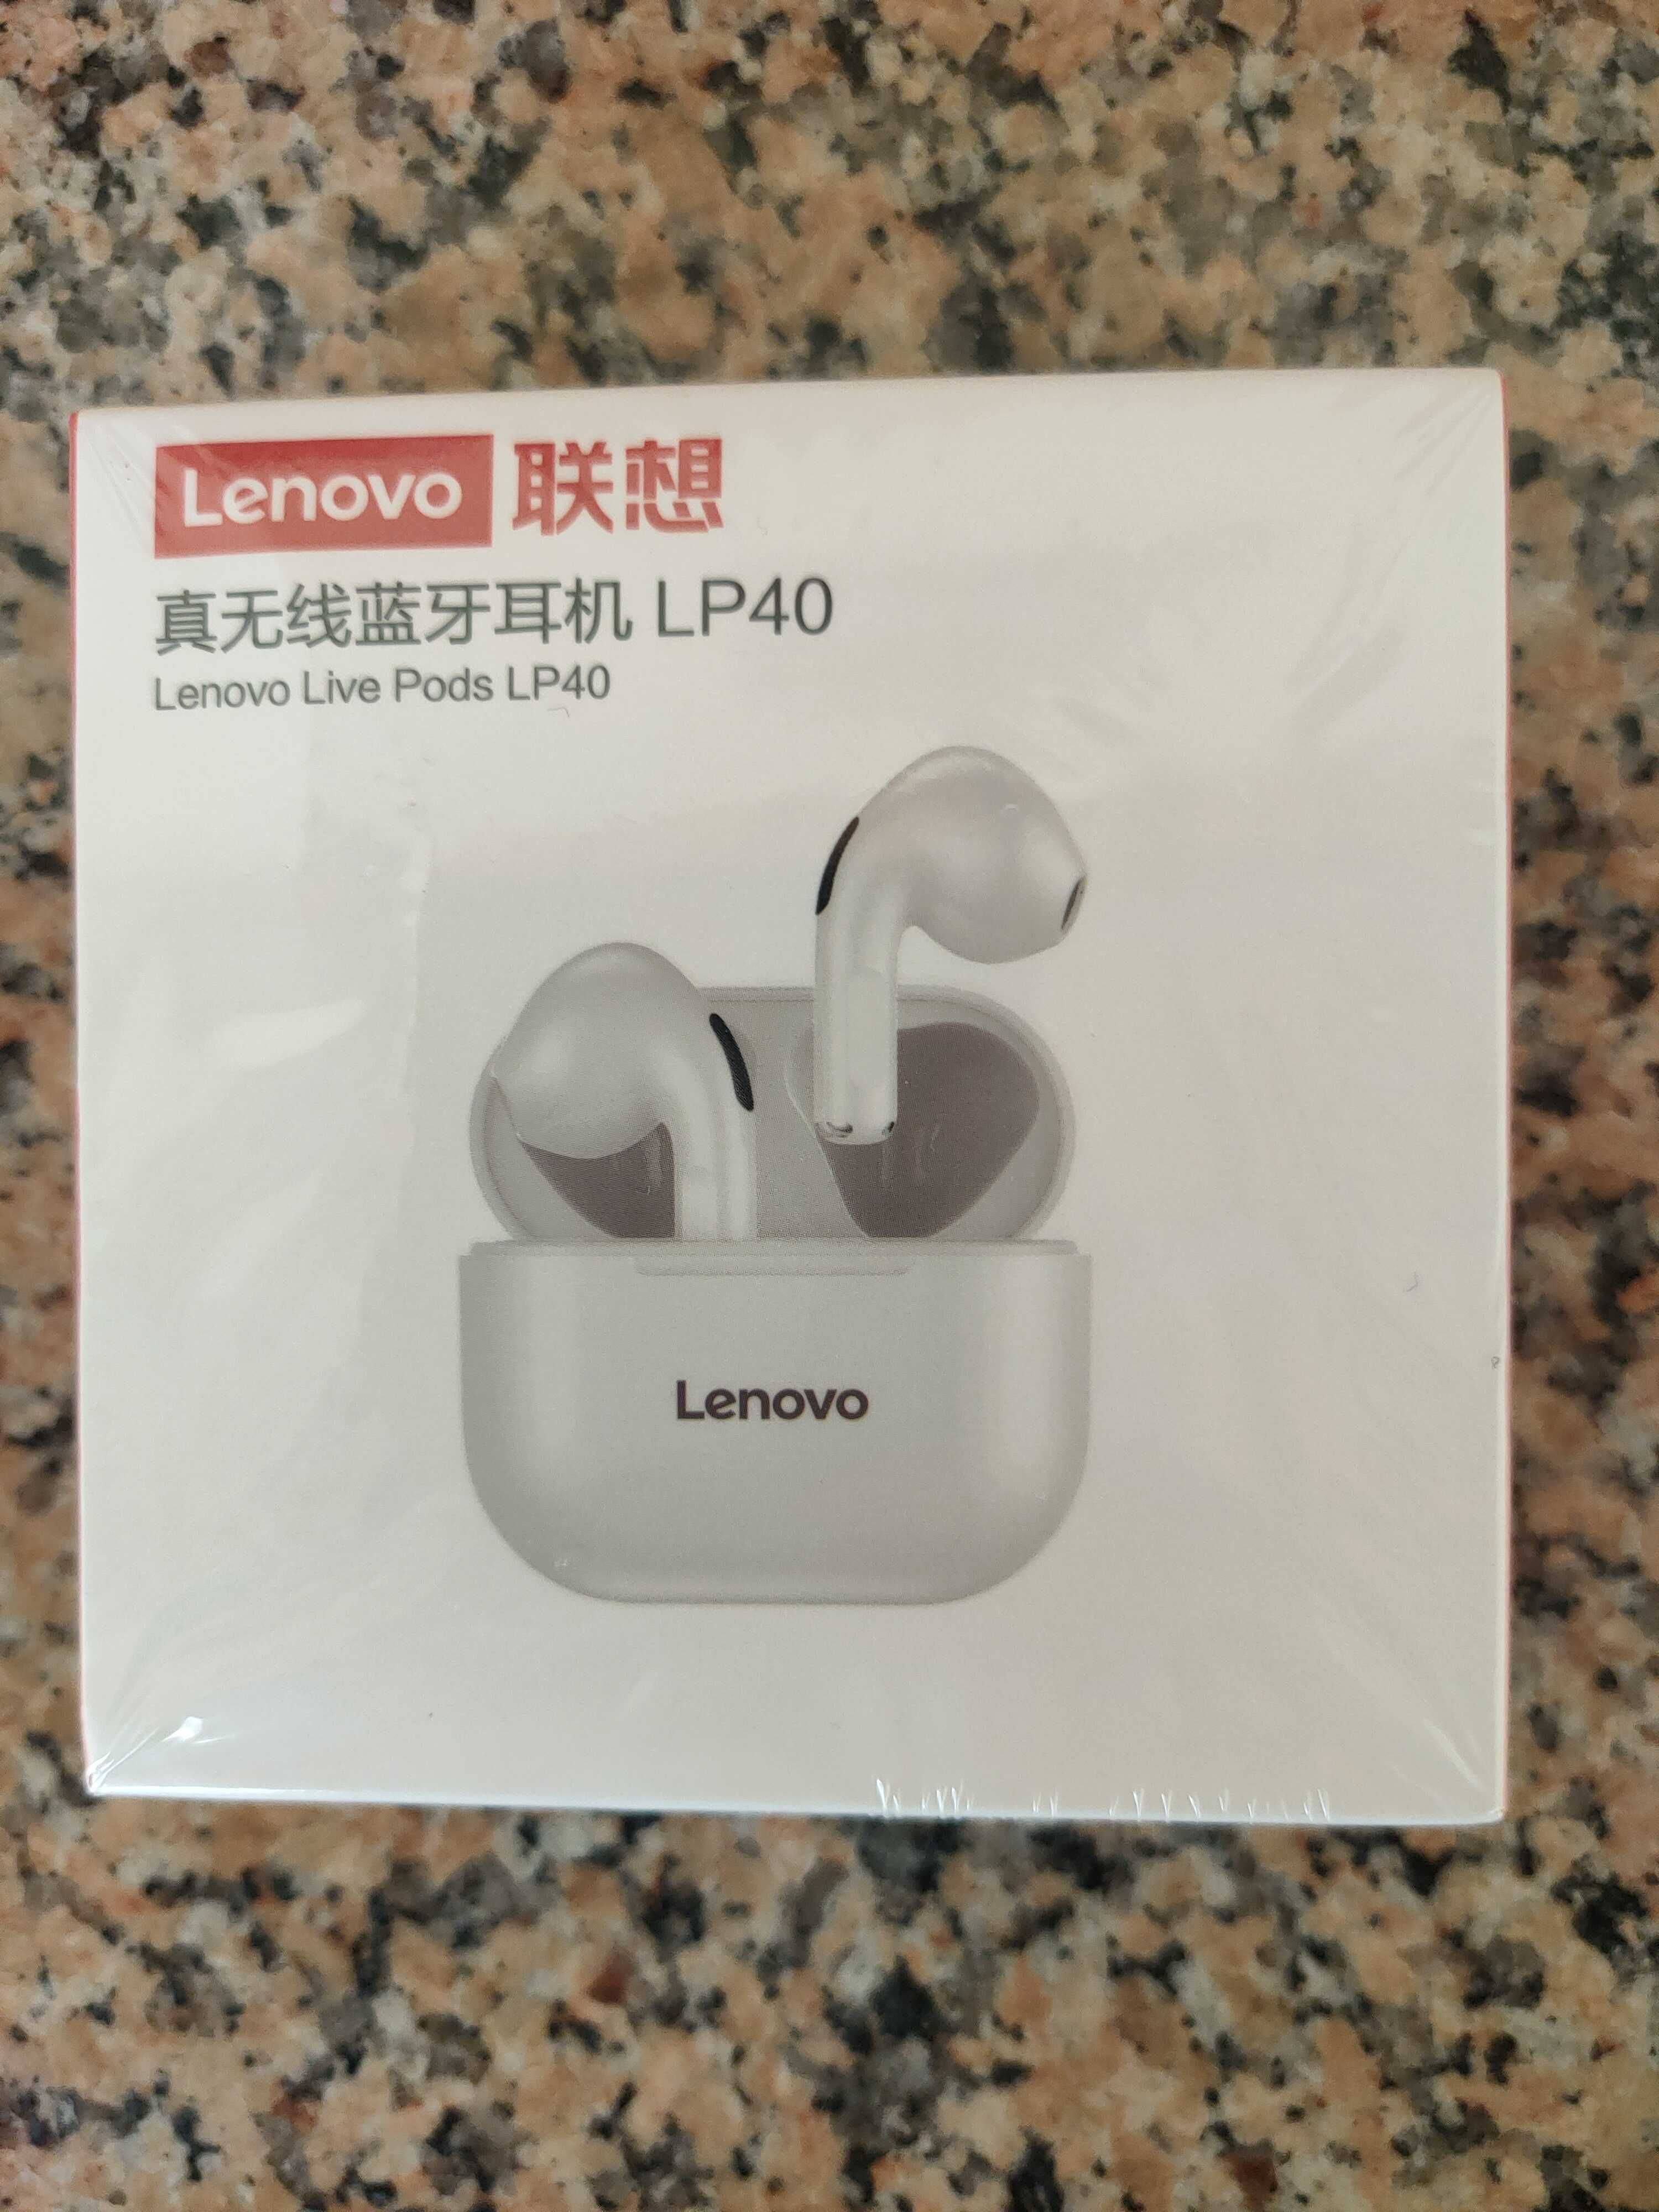 Lenovo live pods LP40